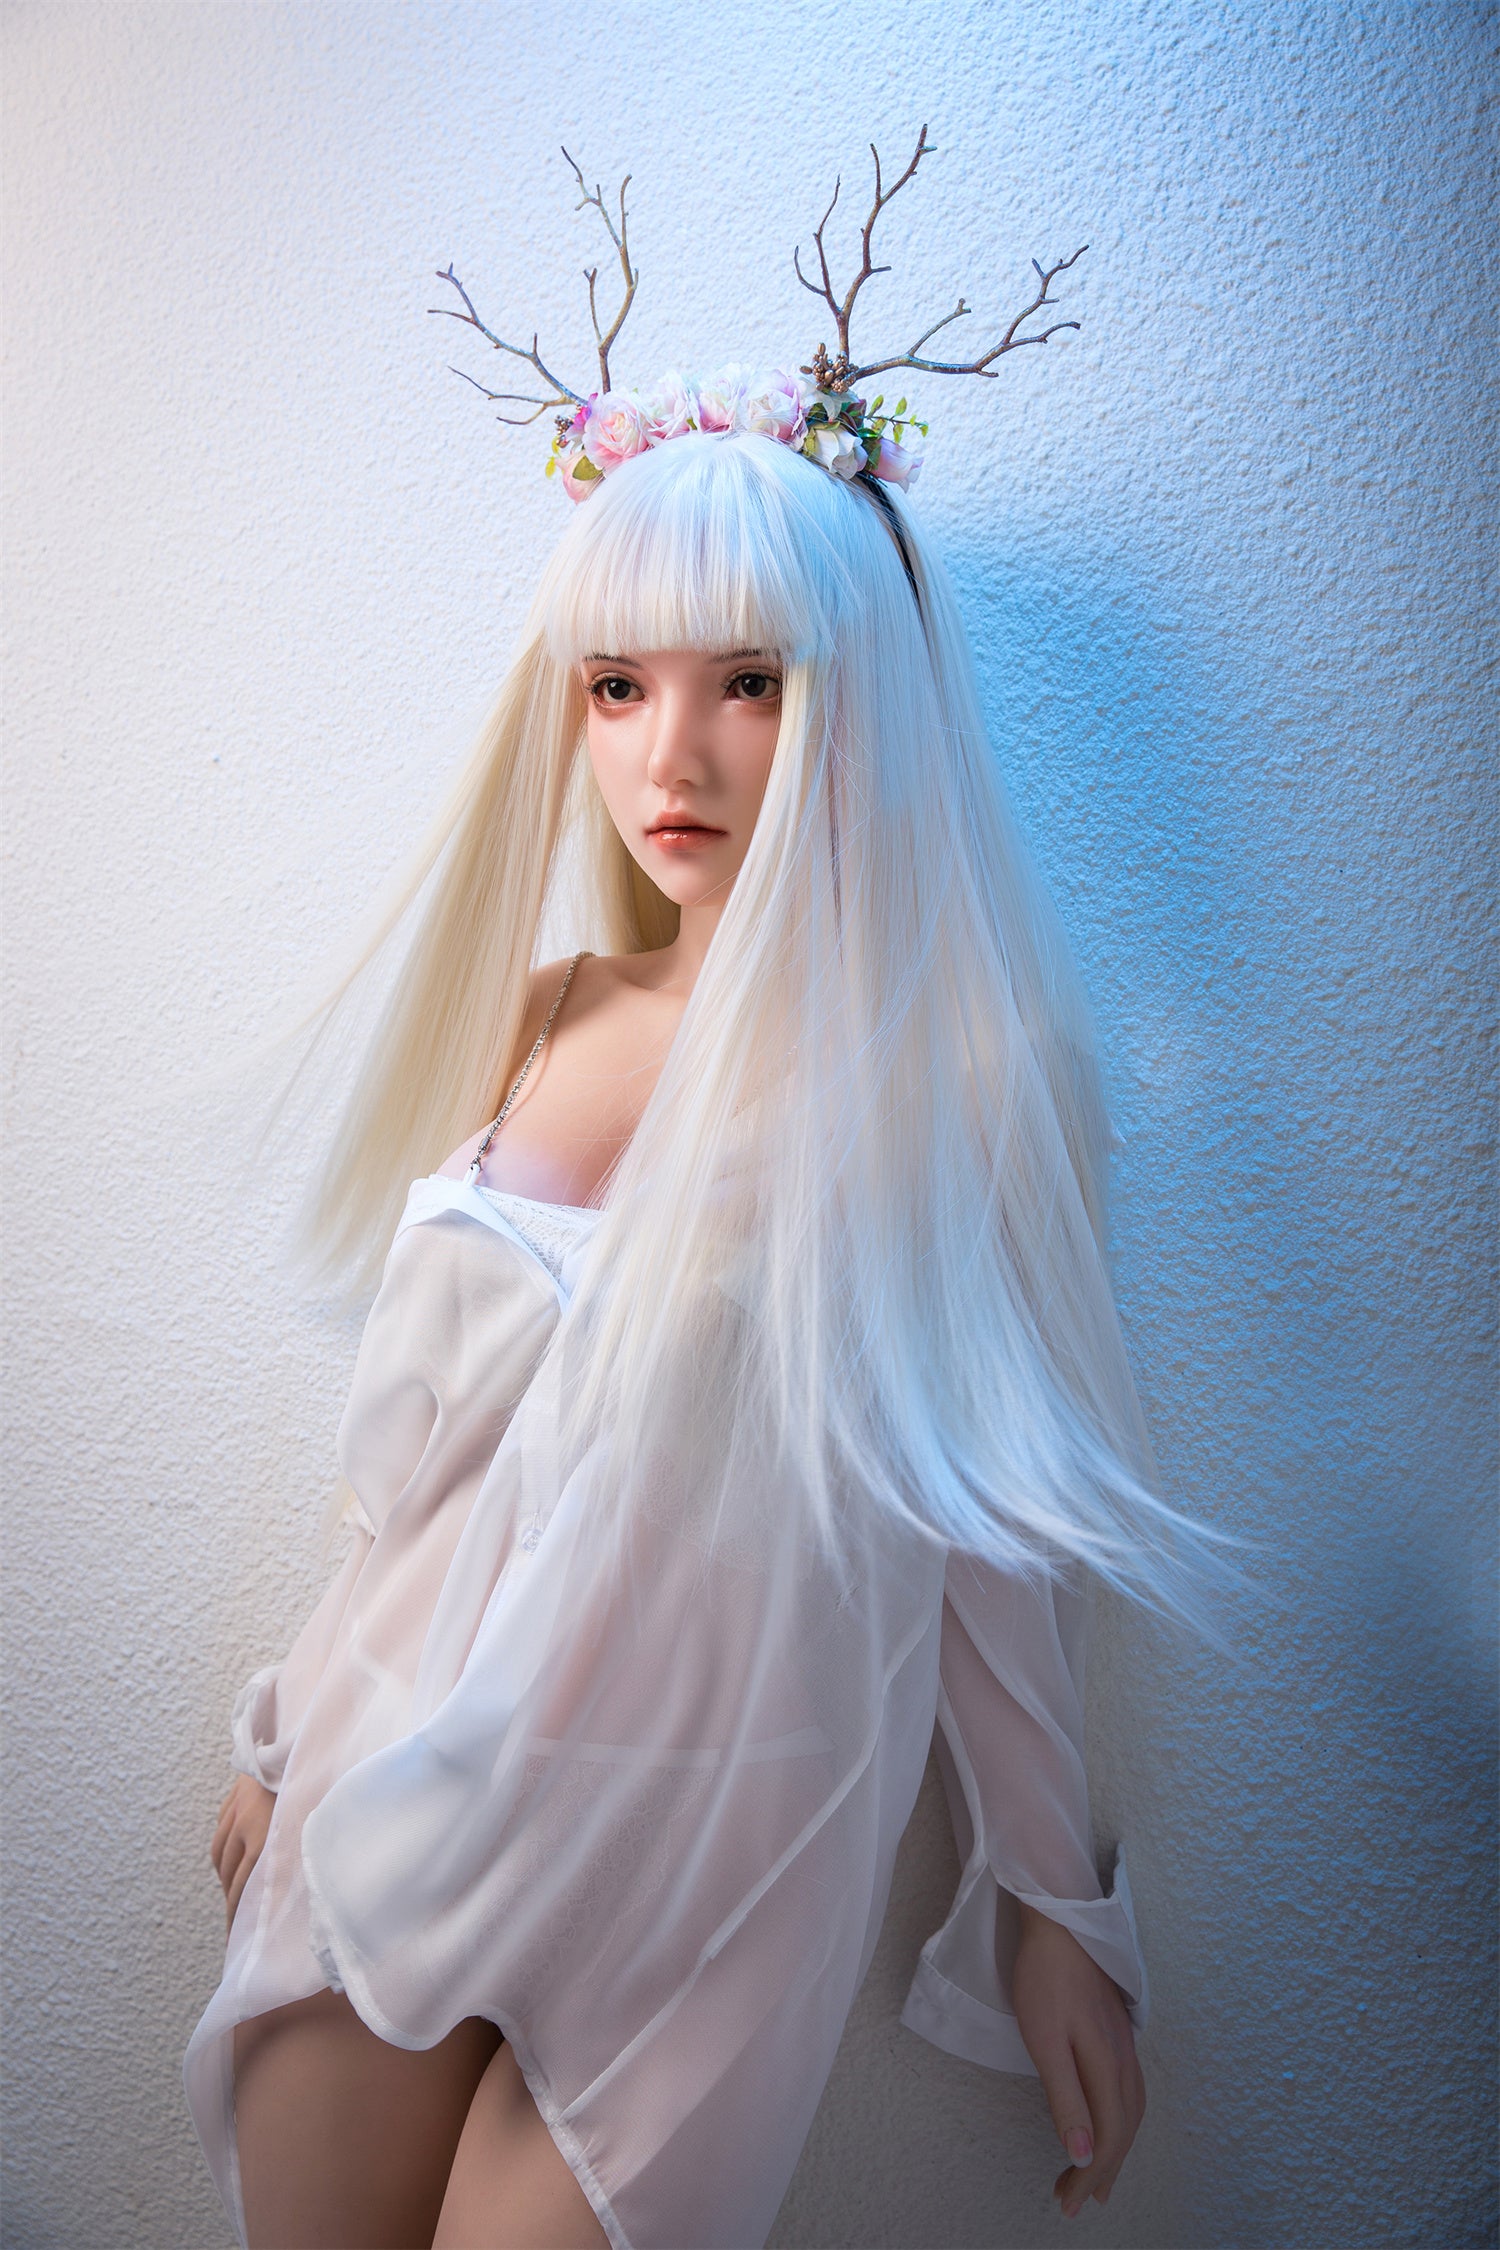 QITA Doll 162 cm Silicone - Fu Jiang | Buy Sex Dolls at DOLLS ACTUALLY